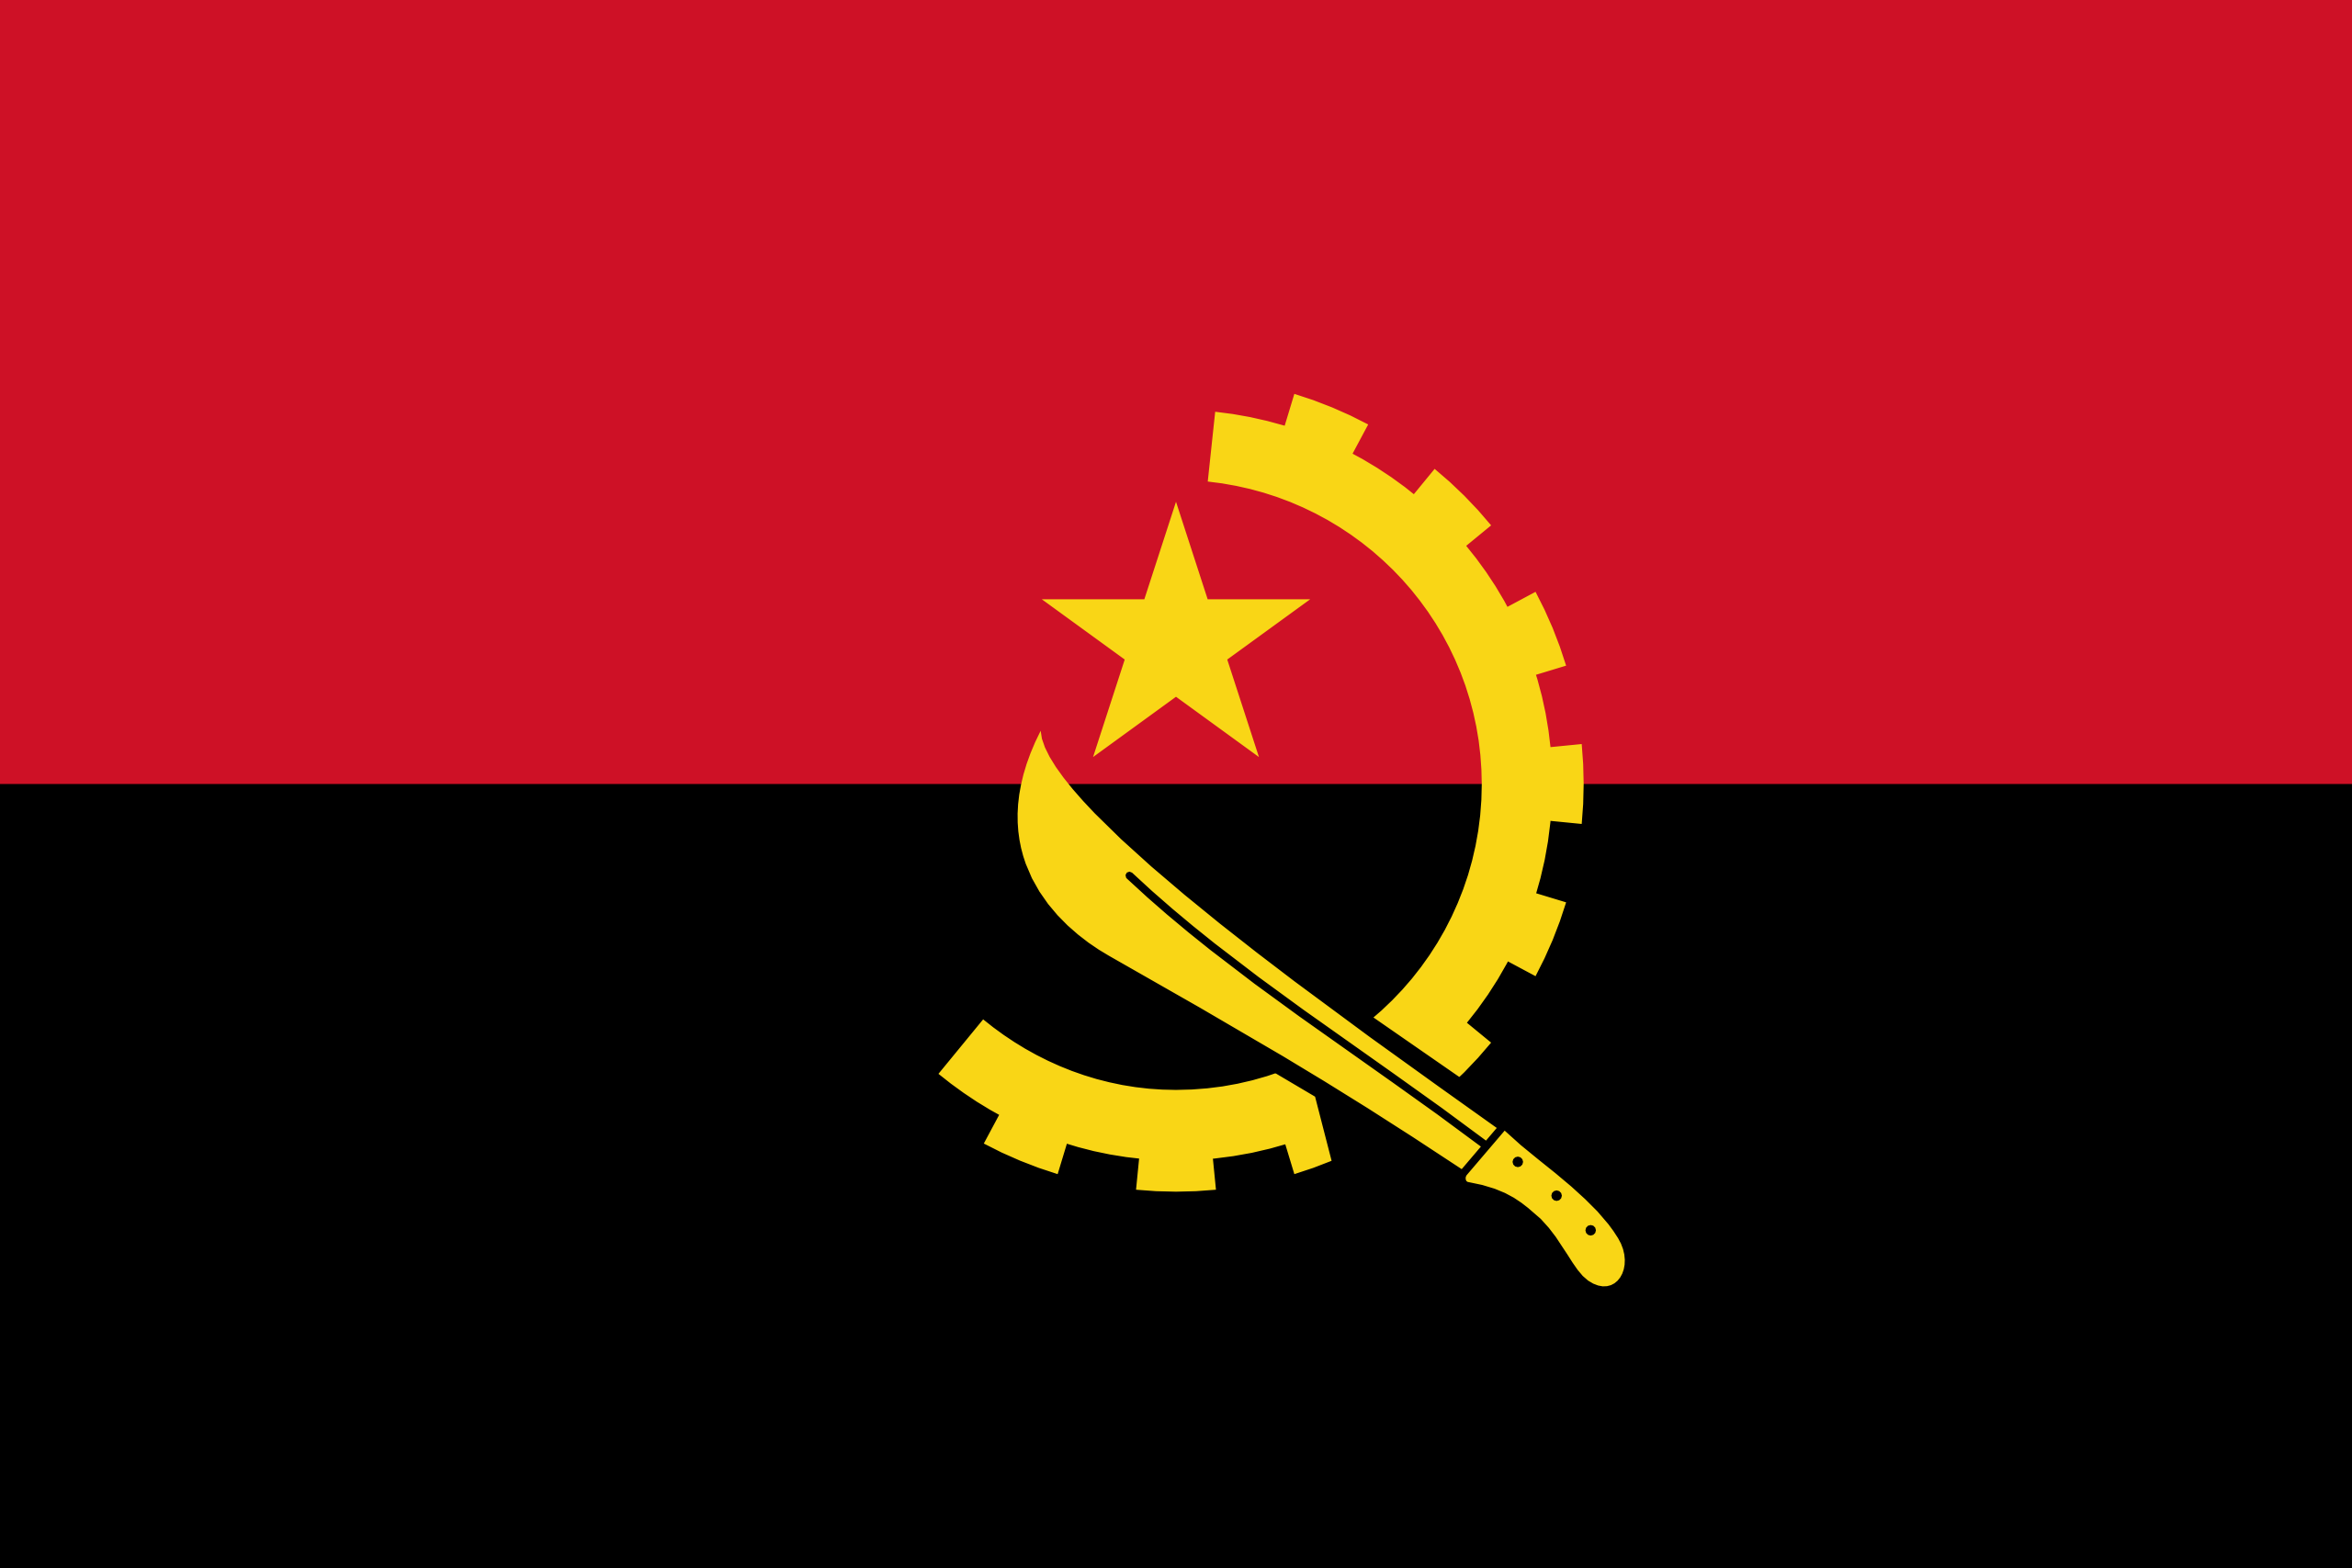 Angola's flag